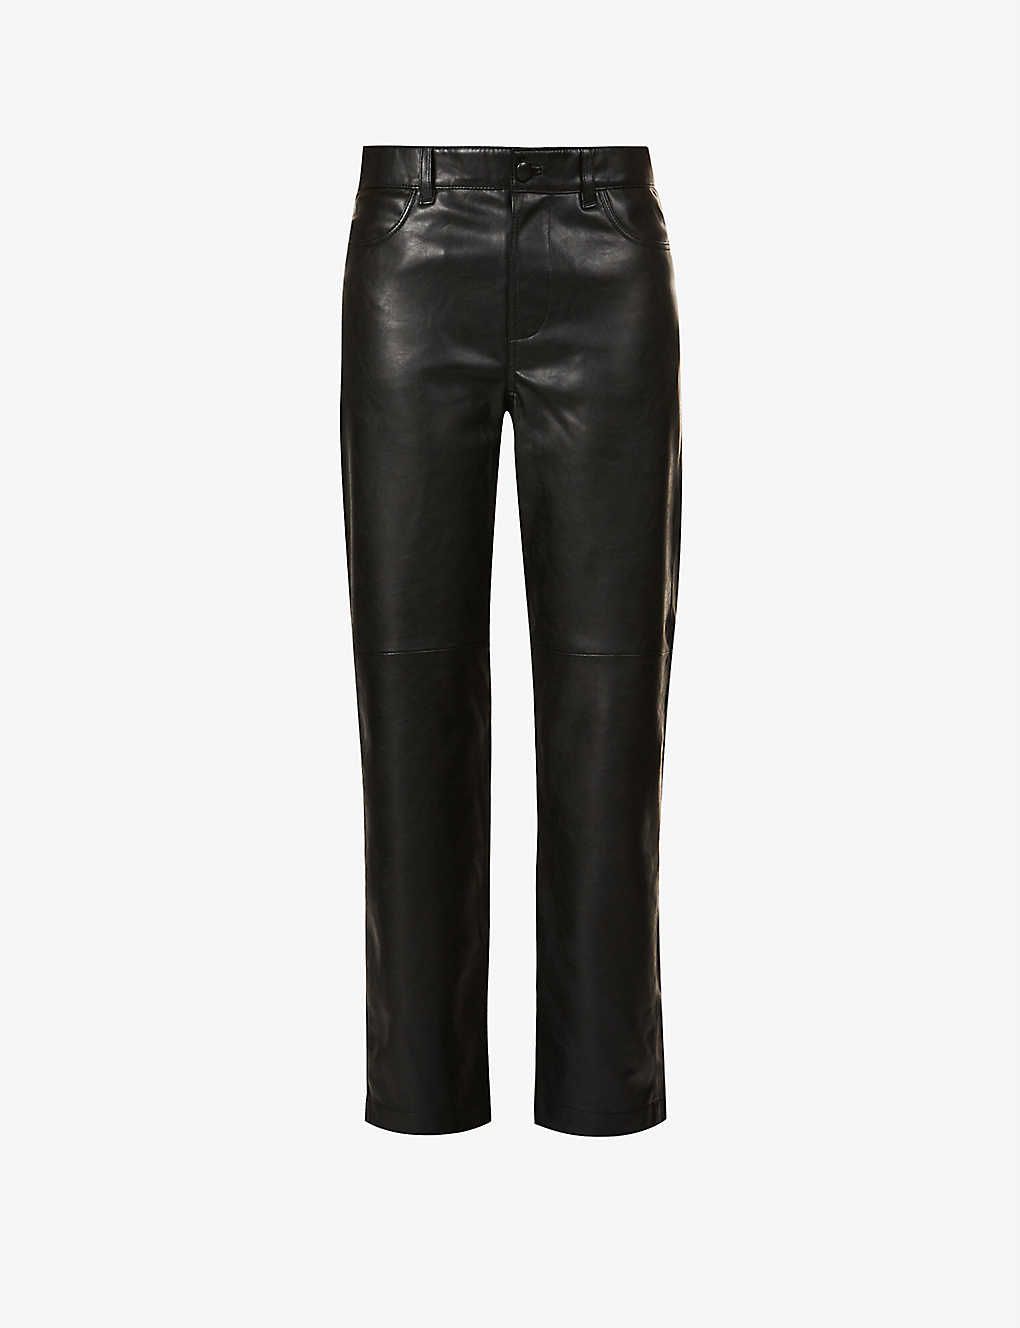 Vestine straight-leg mid-rise faux-leather trousers | Selfridges